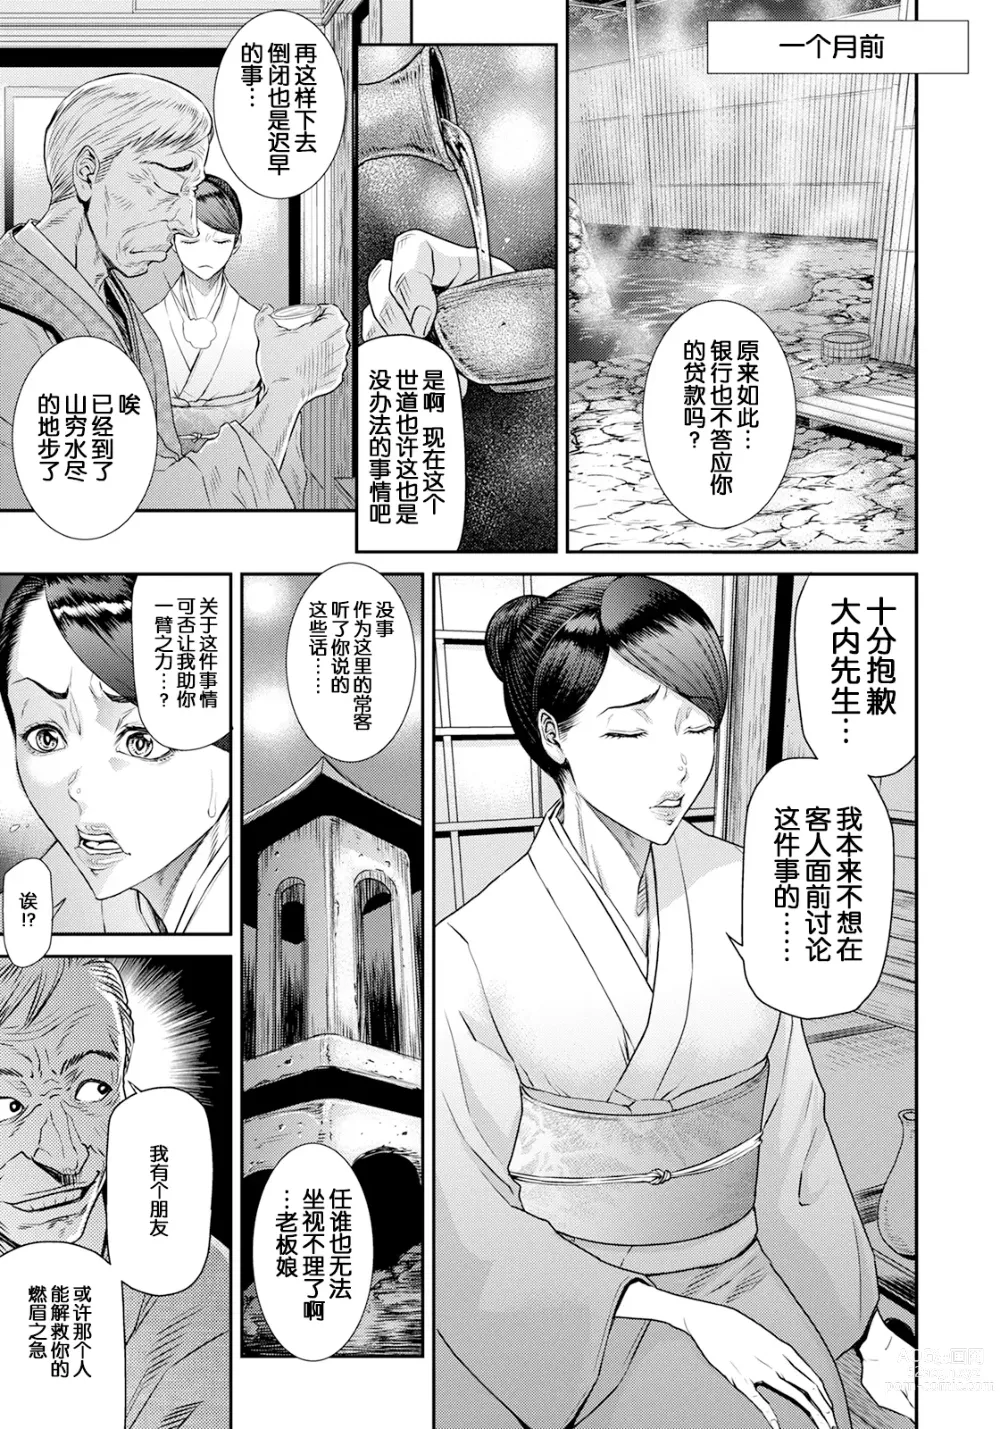 Page 4 of manga Shinise Ryokan